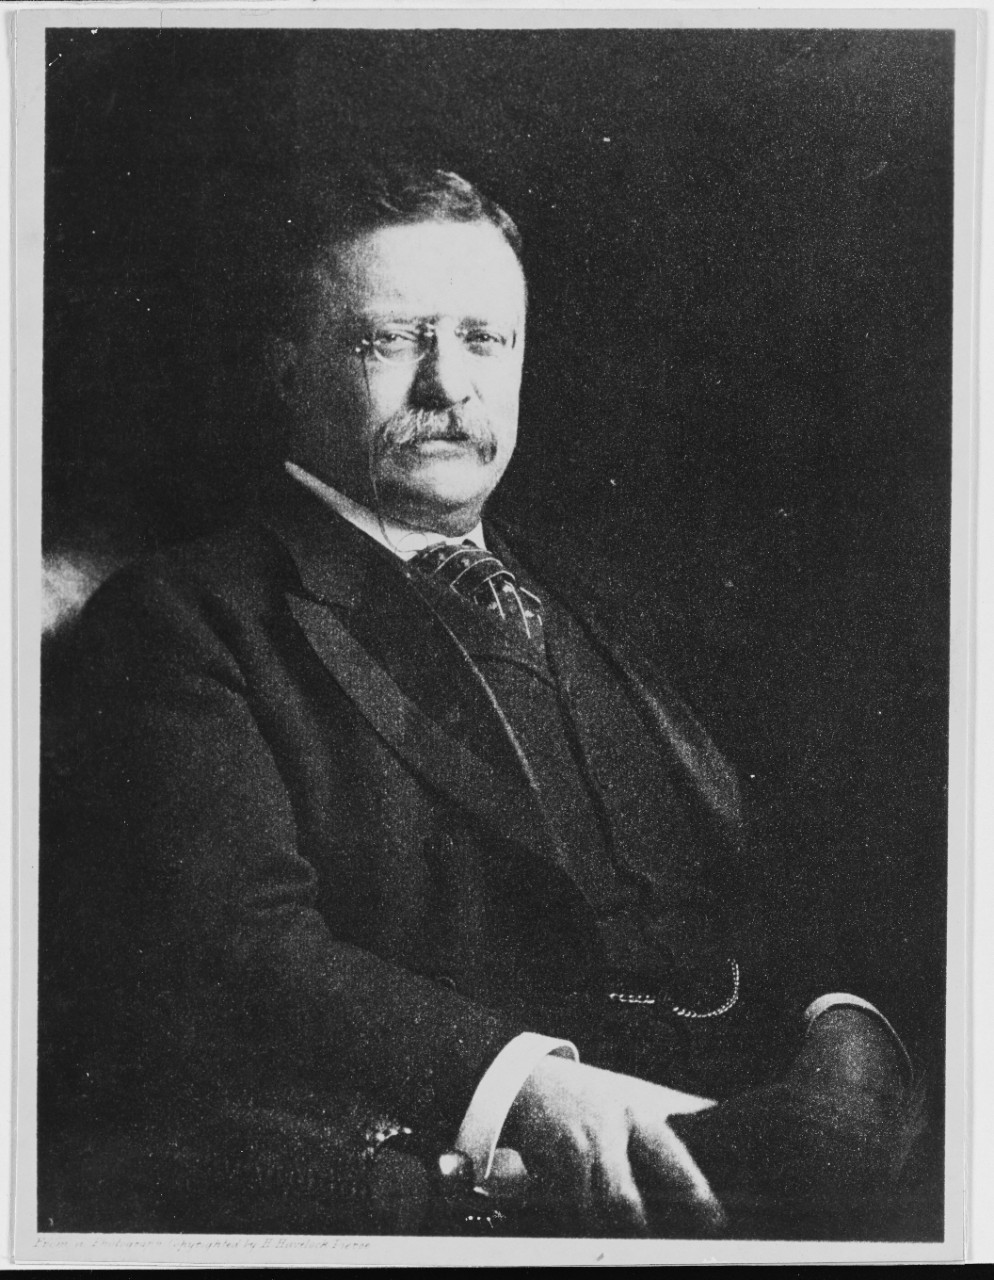 U.S. President Theodore Roosevelt